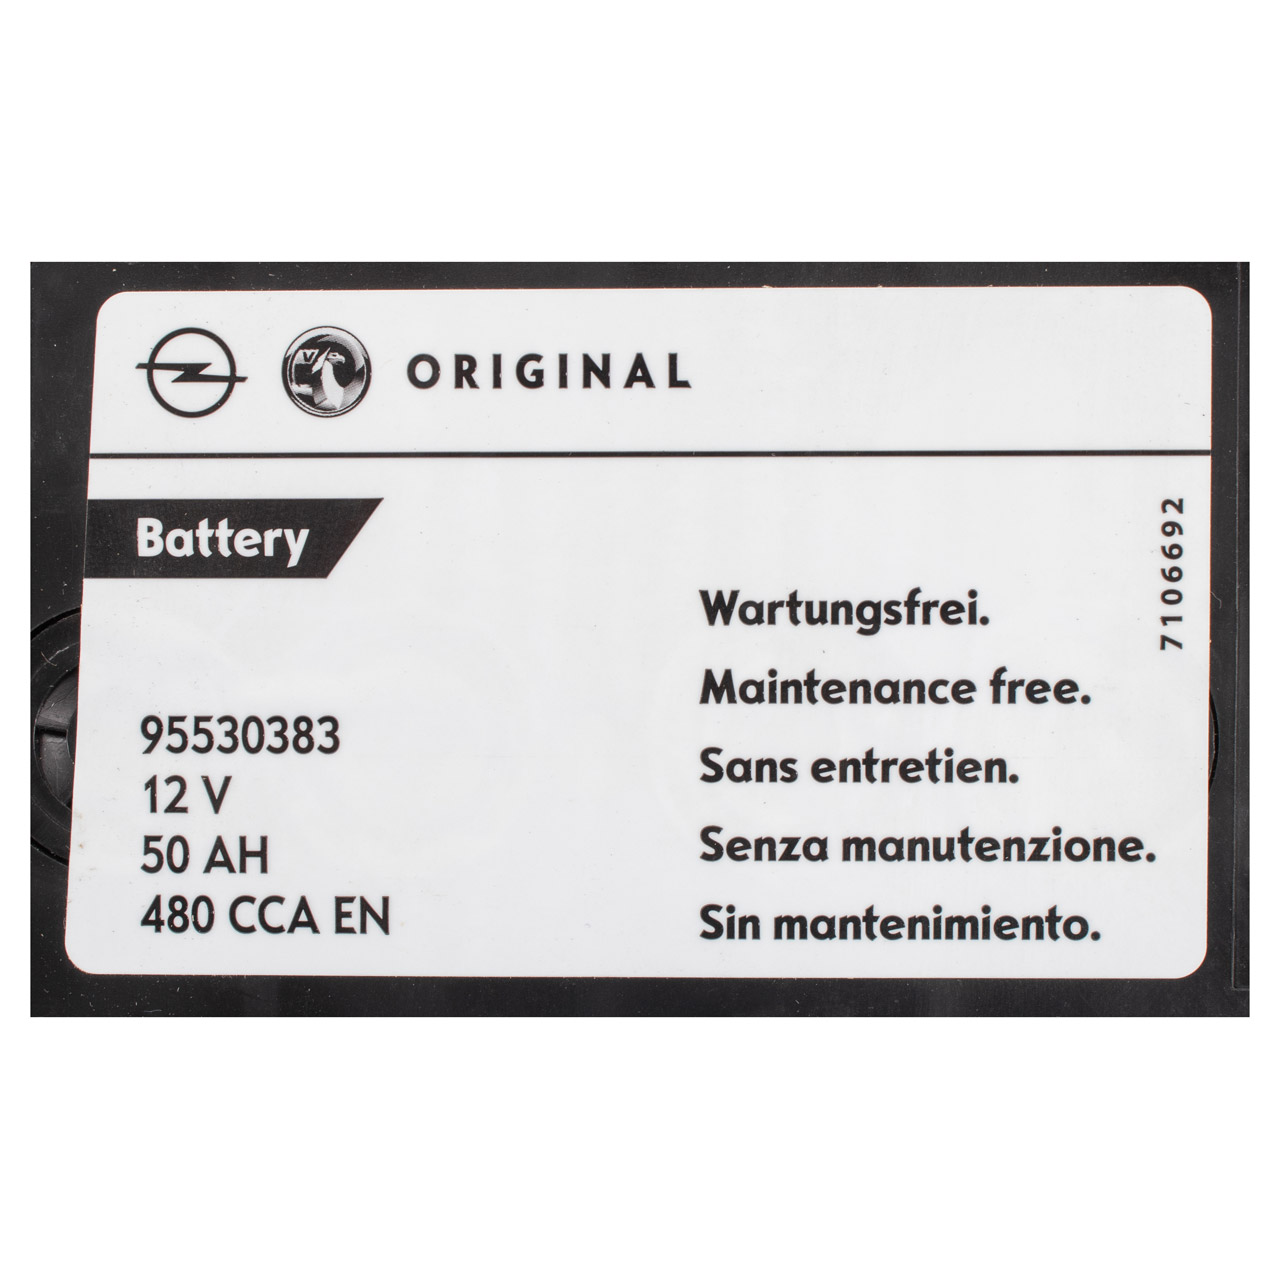 ORIGINAL GM Opel Autobatterie Starterbatterie 12V 50Ah 480 CCA EN 95530383